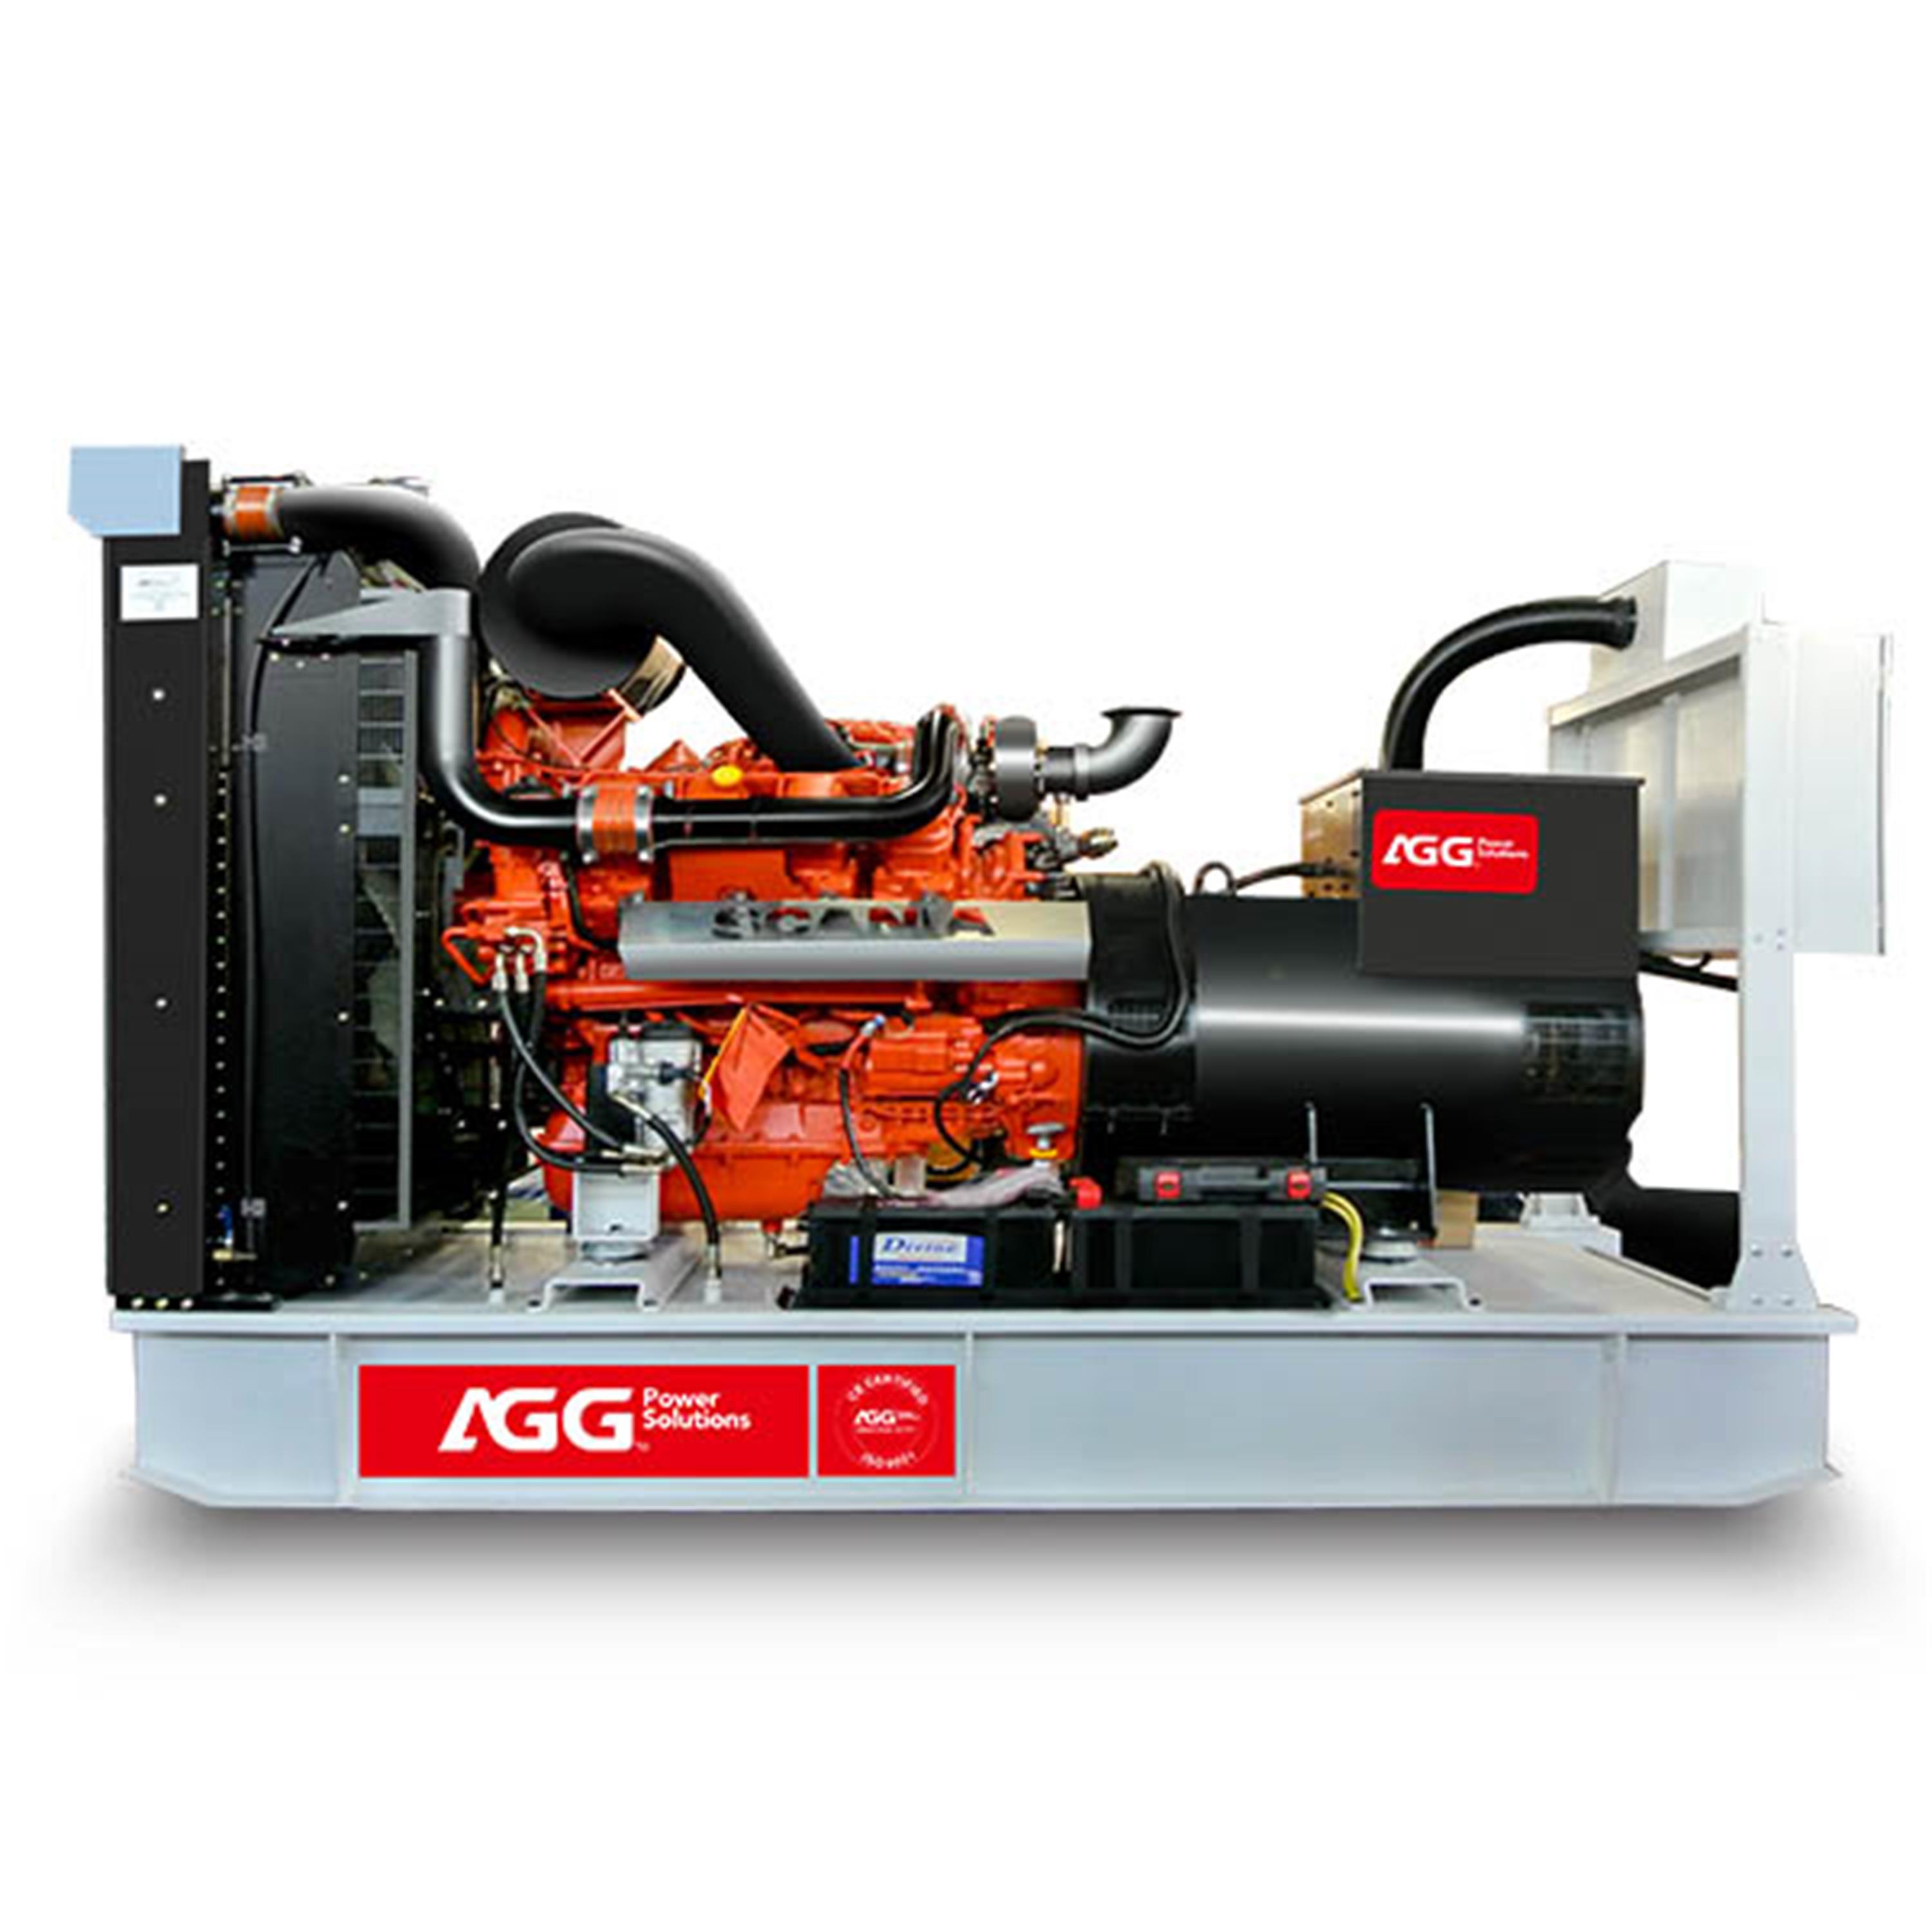 S715E5-50HZ - AGG Power Technology (UK) CO., LTD.